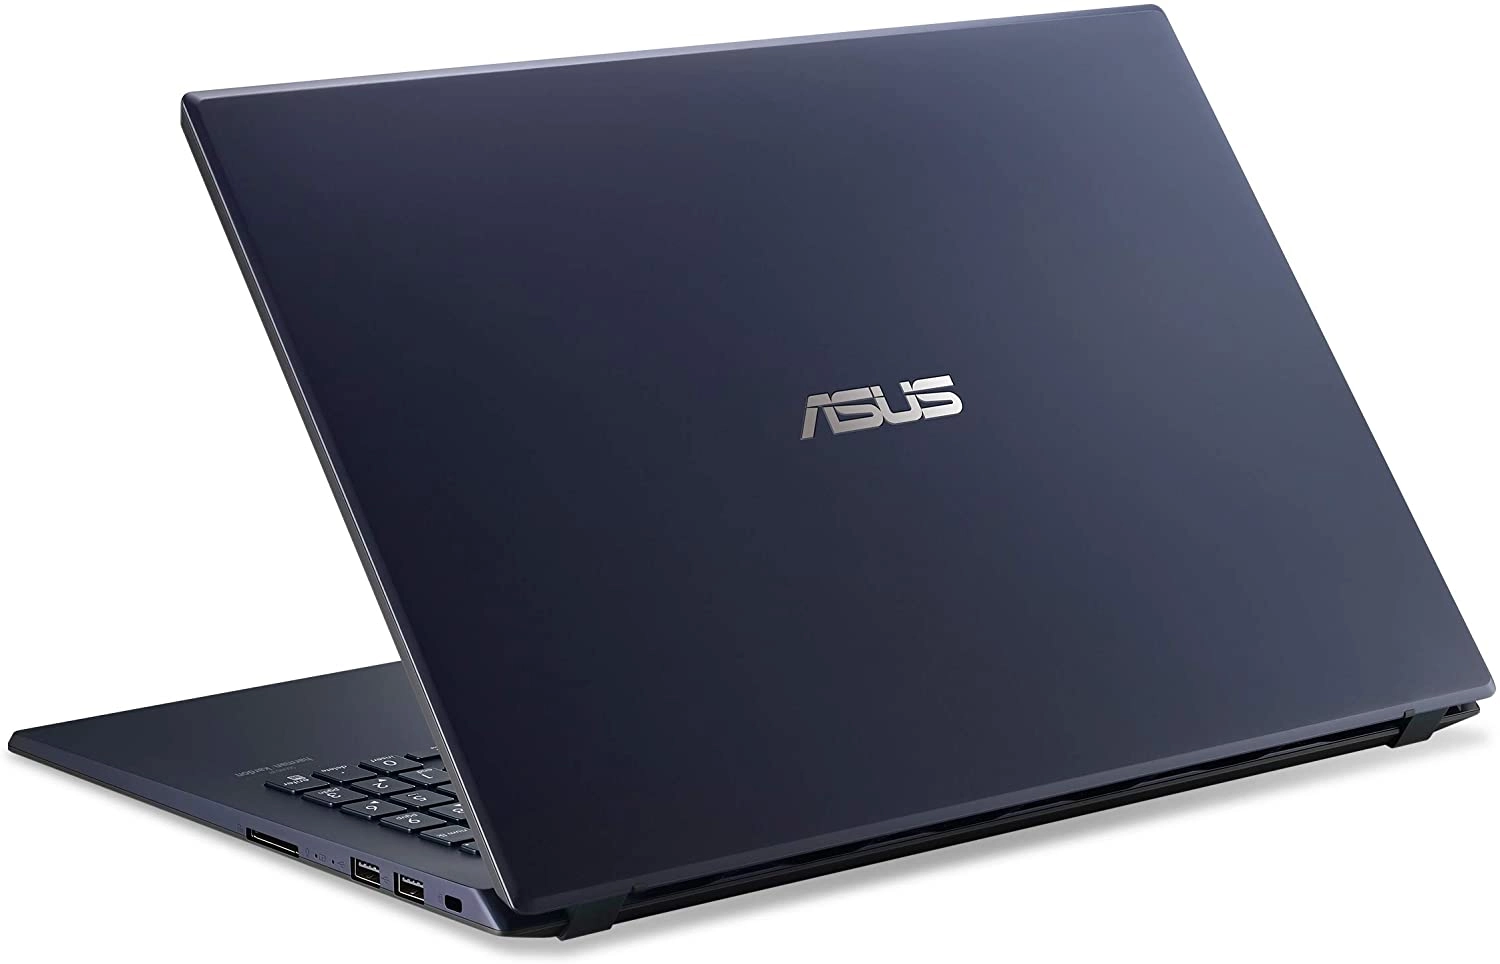 Asus VivoBook K571 laptop image